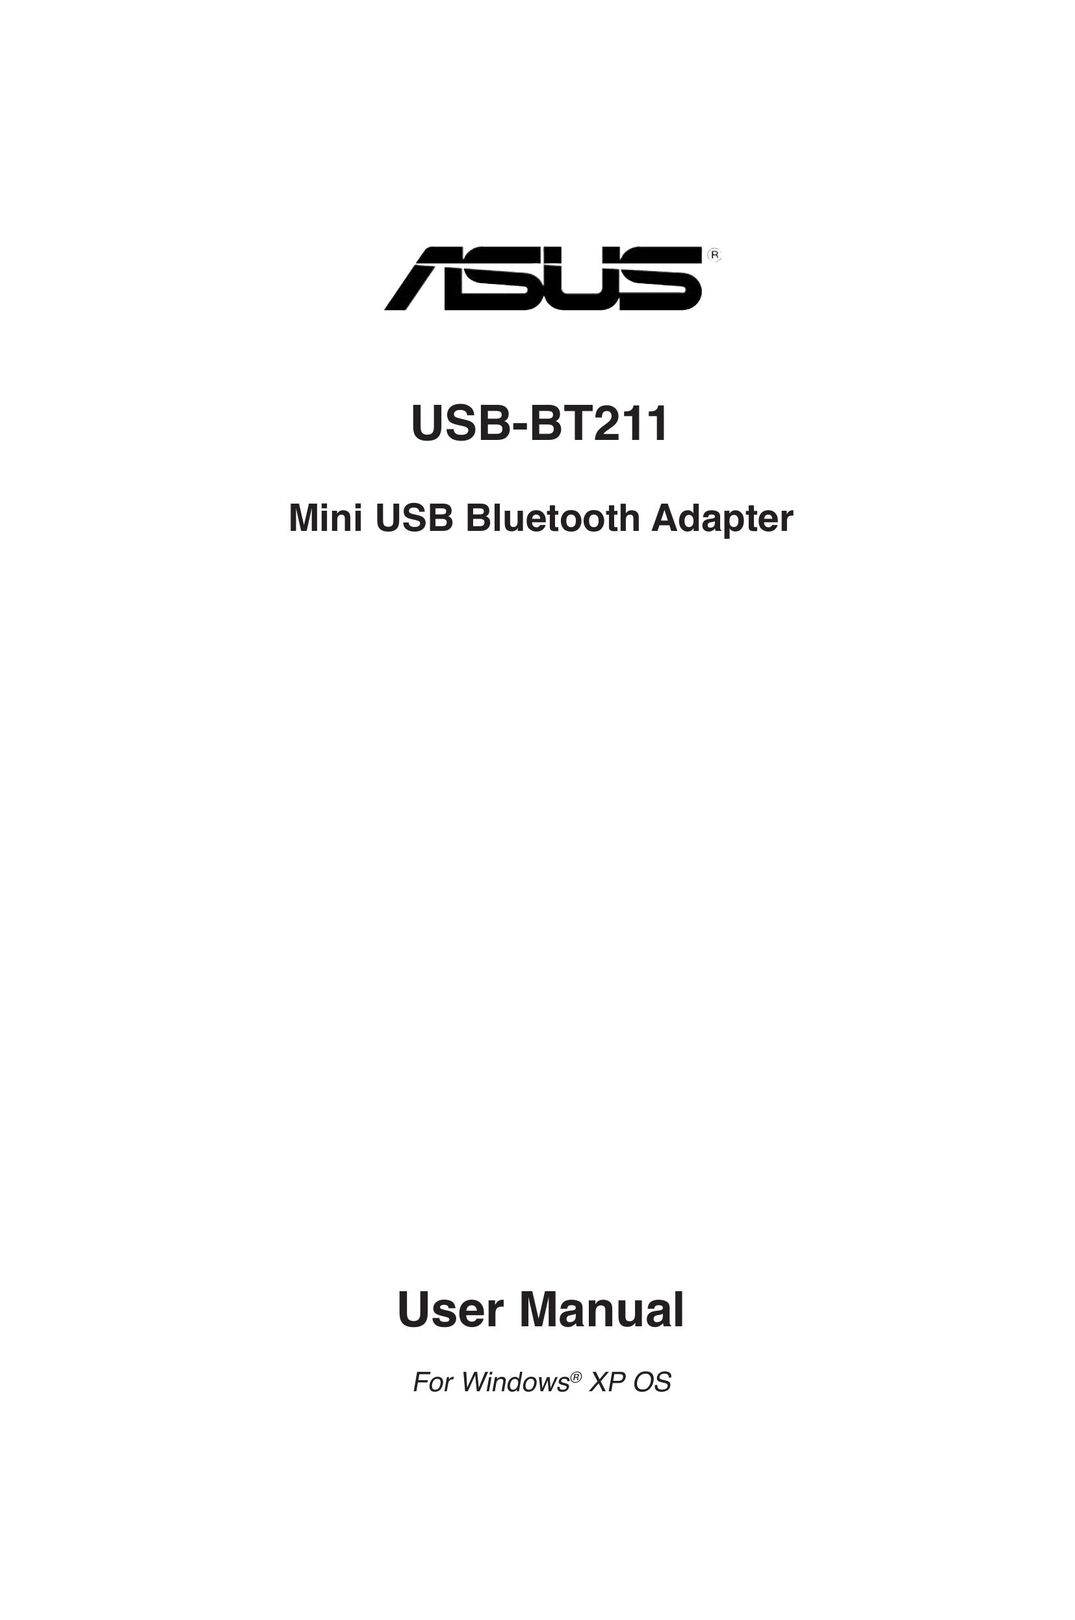 Asus USBBT211 Computer Accessories User Manual